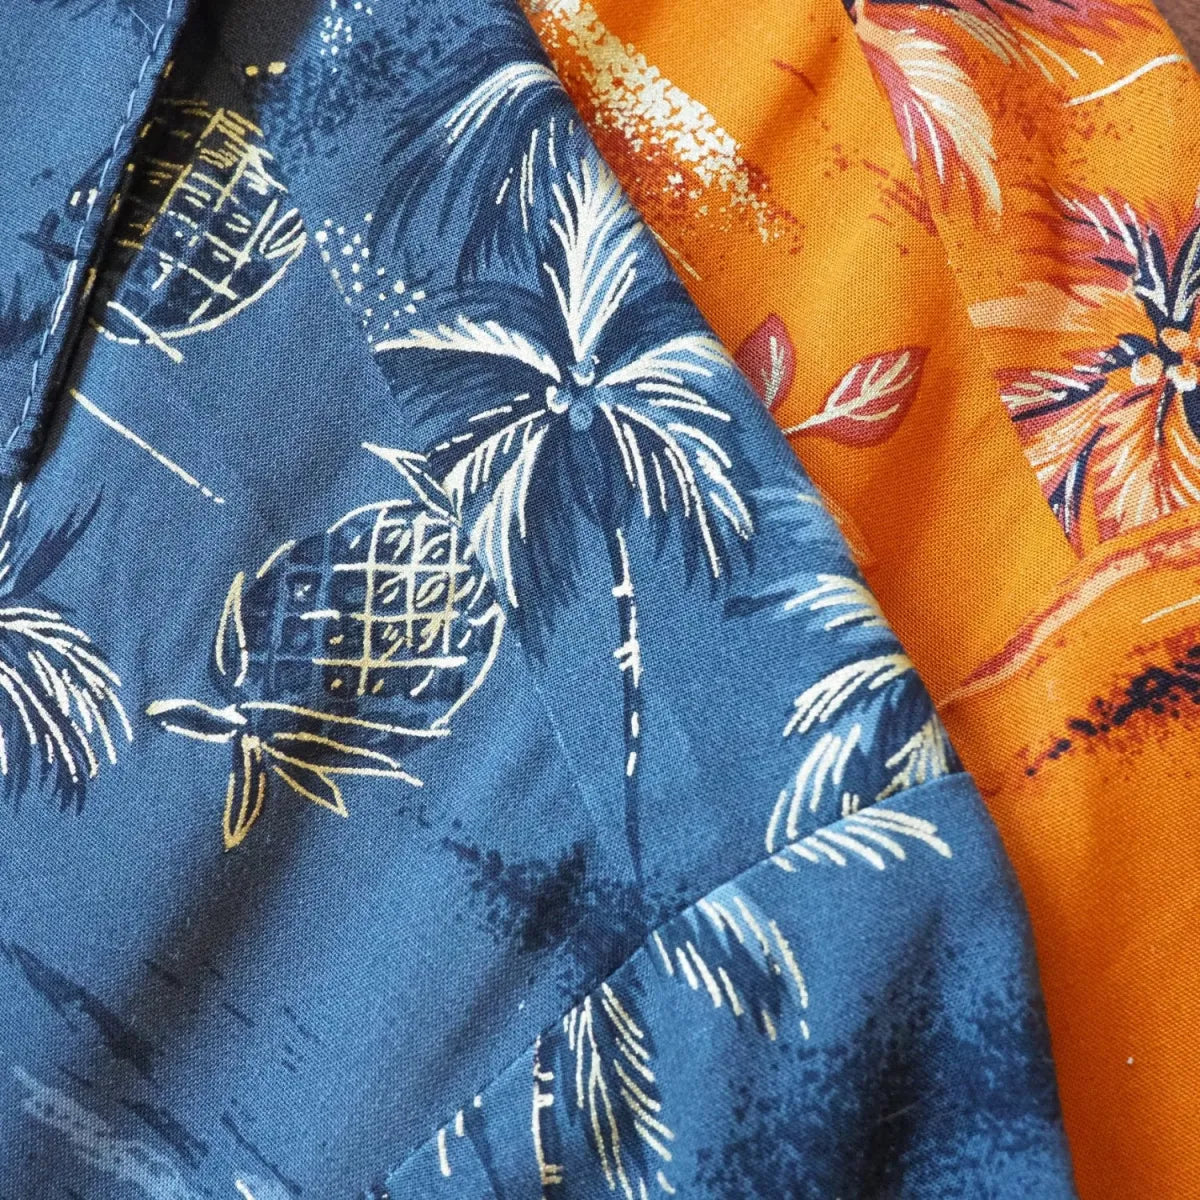 Honolulu orange hawaiian aloha rayon shirt